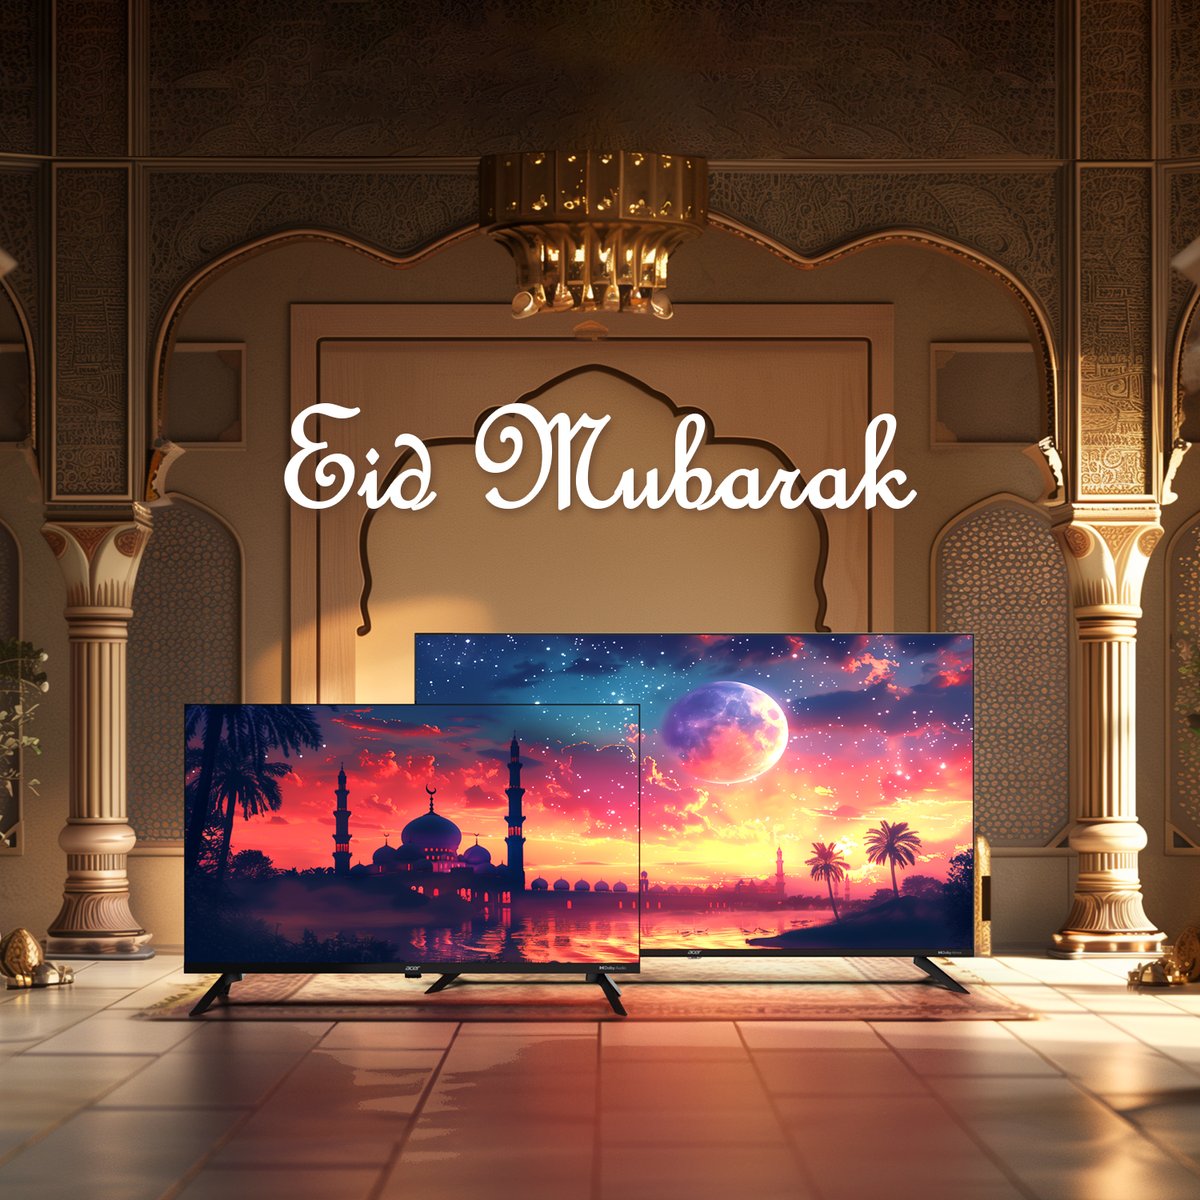 Eid Mubarak from Acer Televisions!

#AcerTelevisions #FestiveGreetings #Eid #EidMubarak #GoogleTV #AcerTV #TV #HDR10 #FramelessDesign #DolbyVision #DolbyAtmos #16GBstorage #Televisions #EidMubarak2024